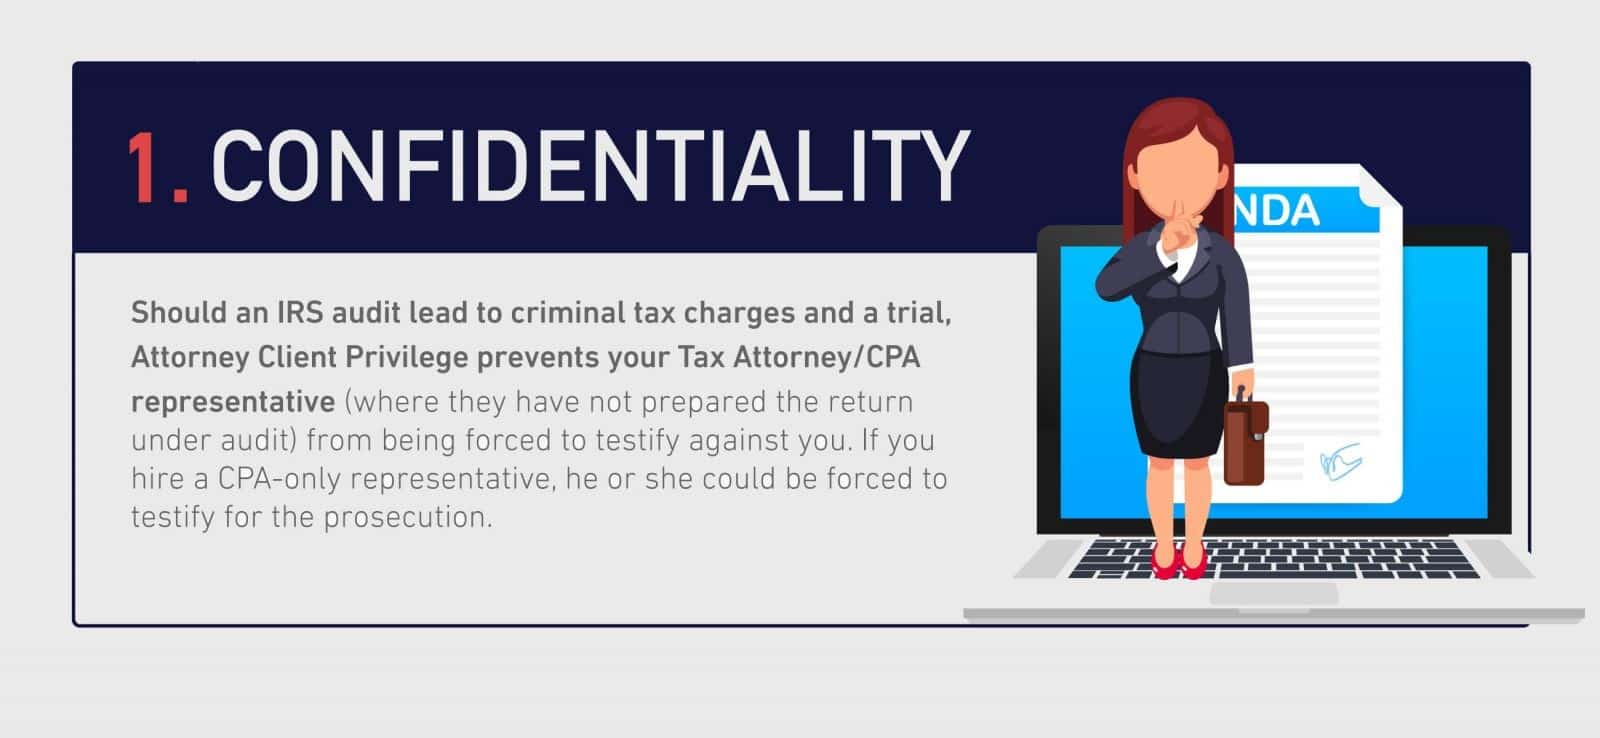 Confidentiality-klasing-associates-santa-barbara-tax-attorney